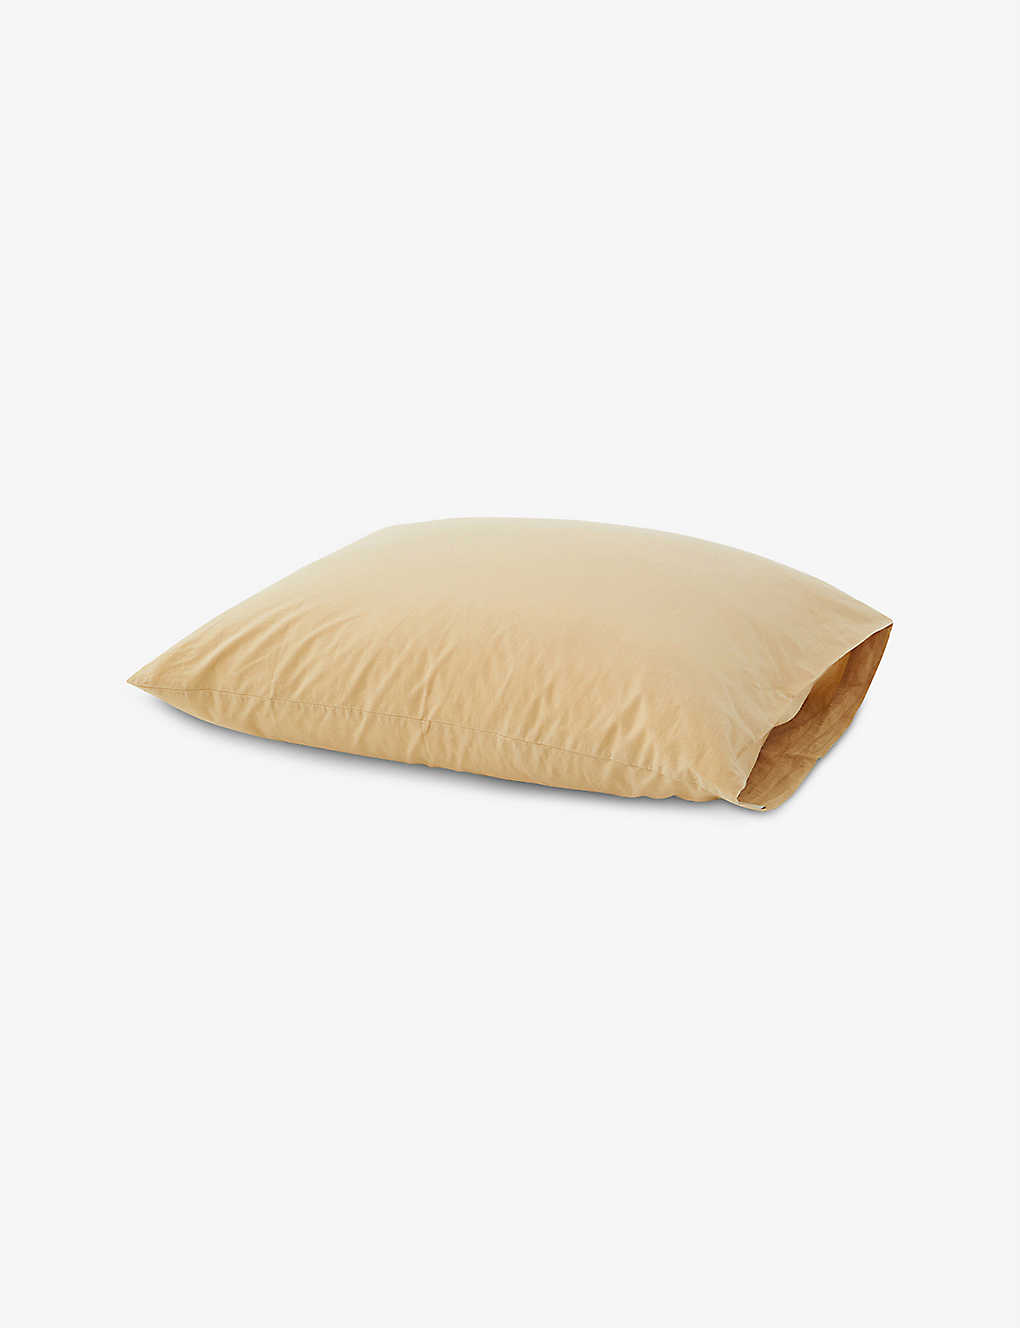 TEKLA コア オーガニックコットン ピローケース 50cm x 70cm Core organic-cotton pillowcase 50cm x 60cm Sand Beige